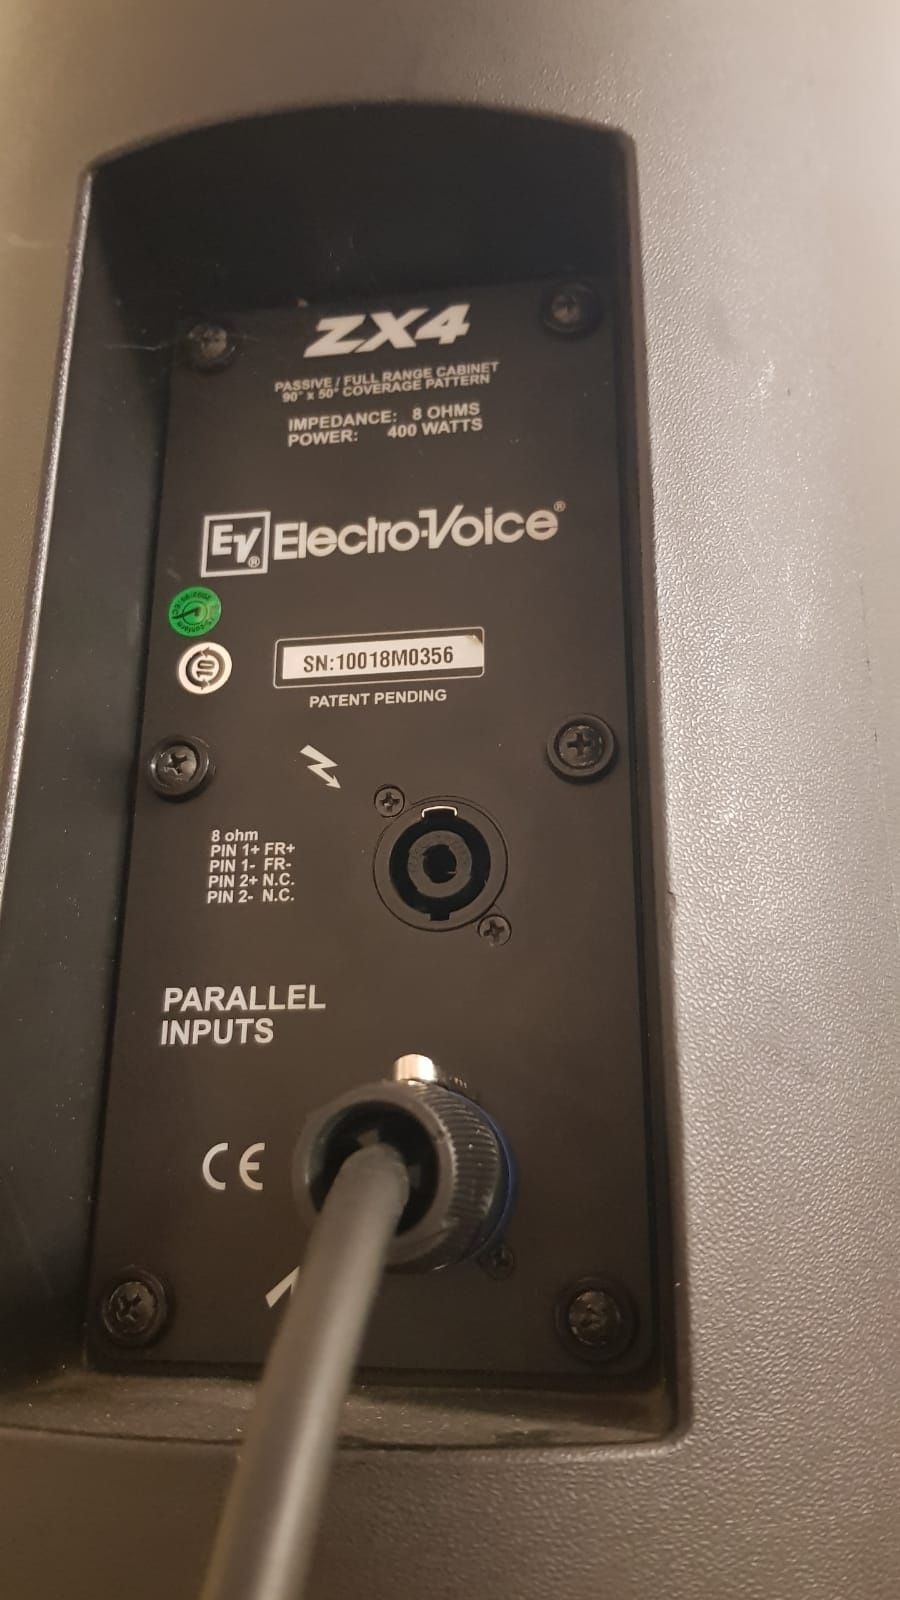 Electro-Vorice Zx4 400€